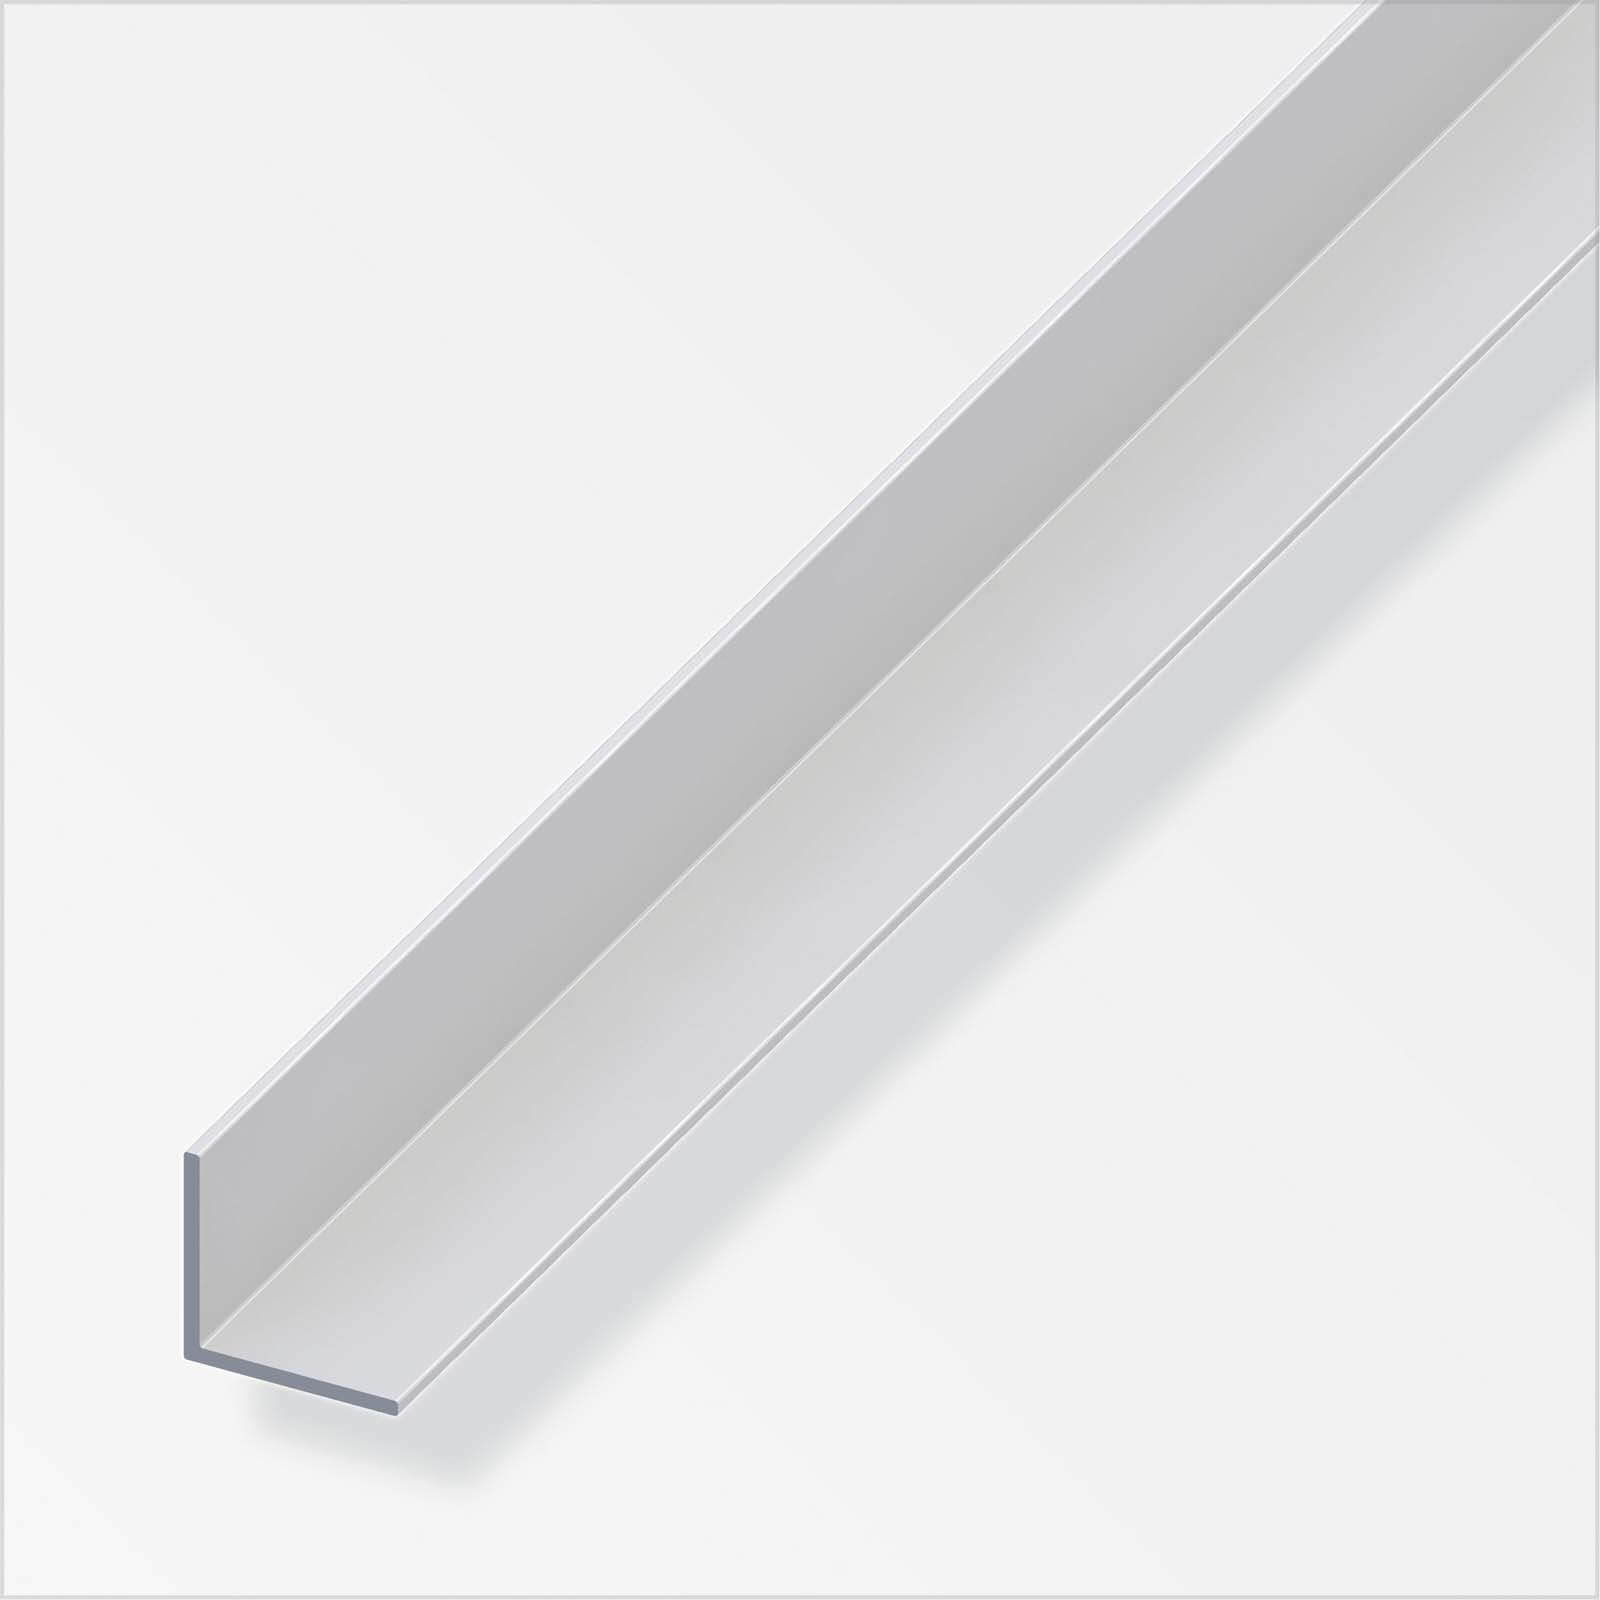 Photo of Anodised Aluminium Equal Angle Profile - 1m X 20 X 20mm